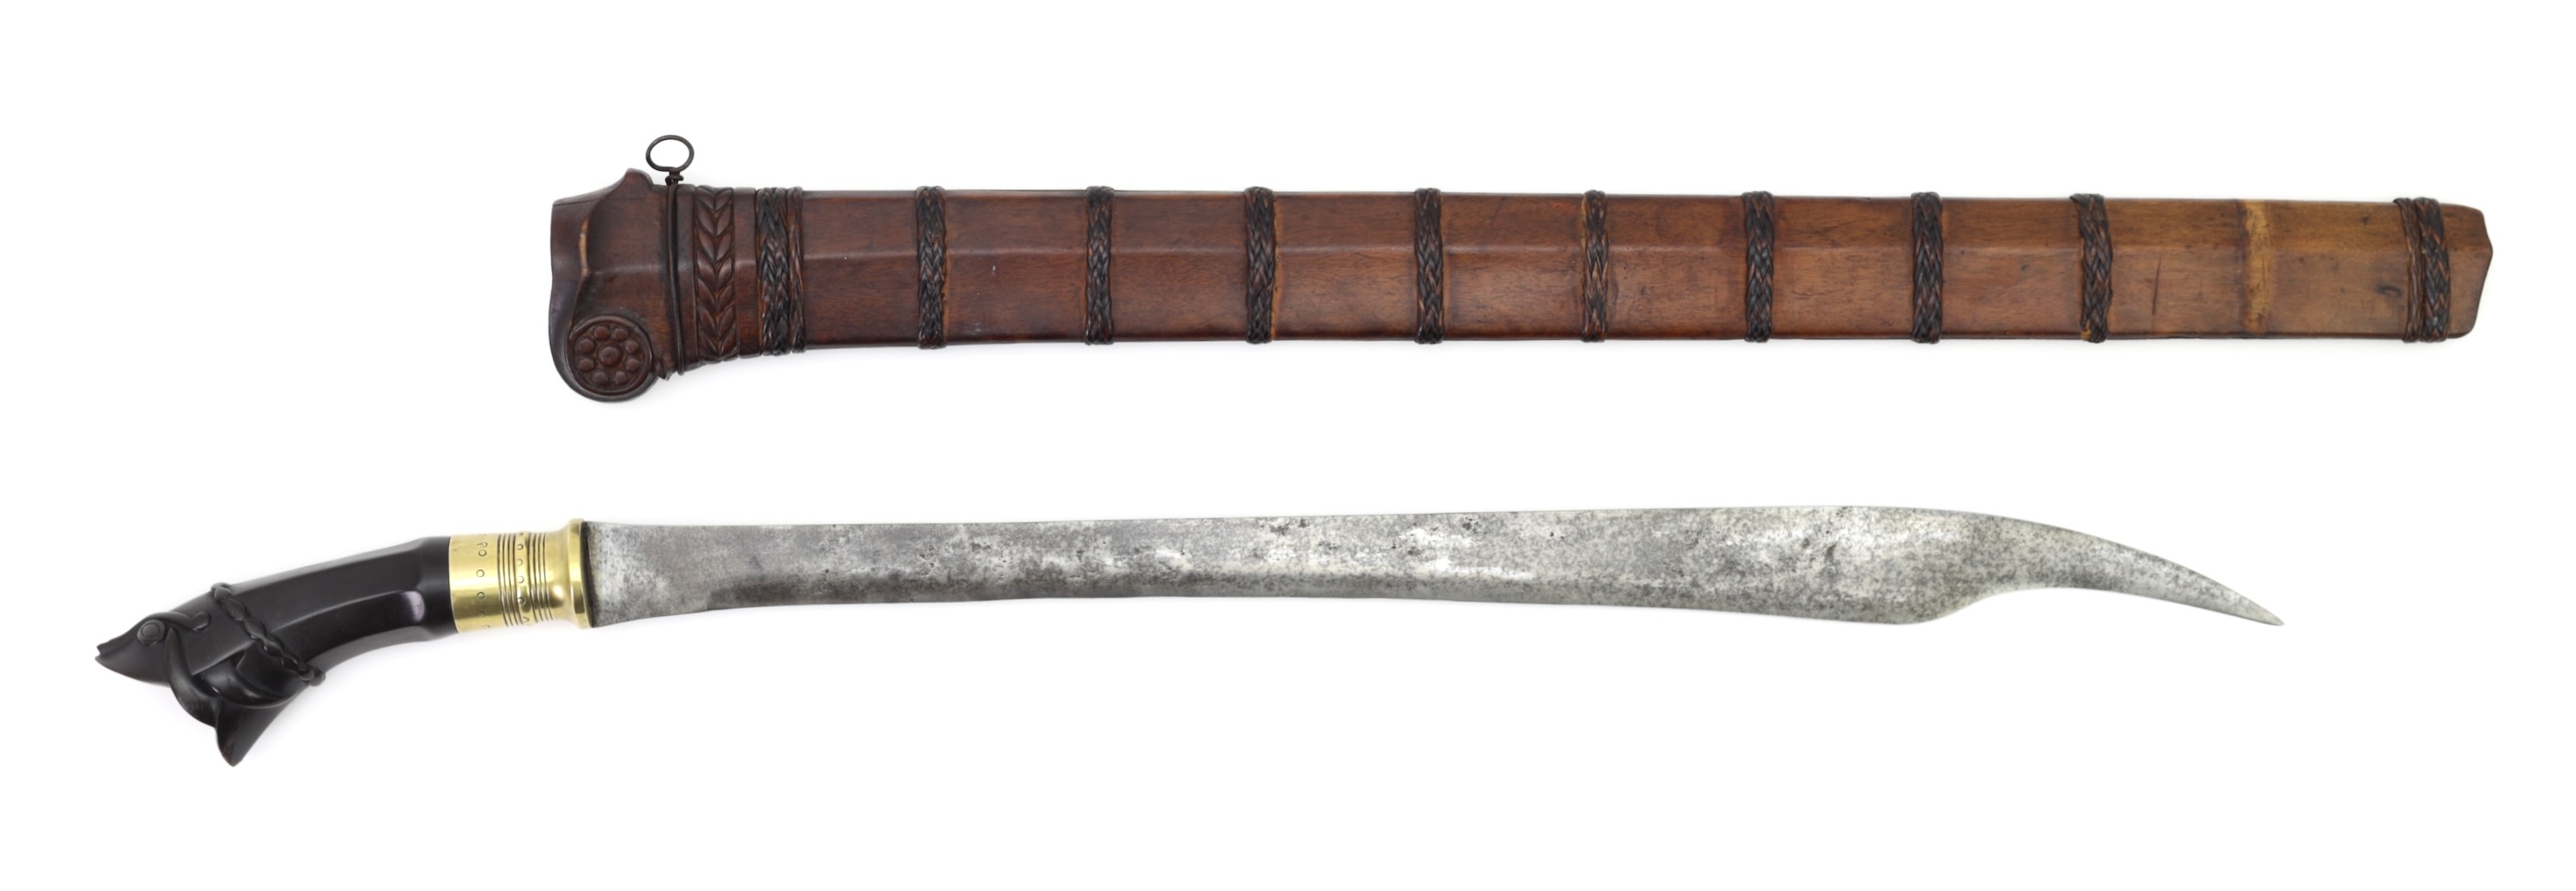 Unusual Nias sword